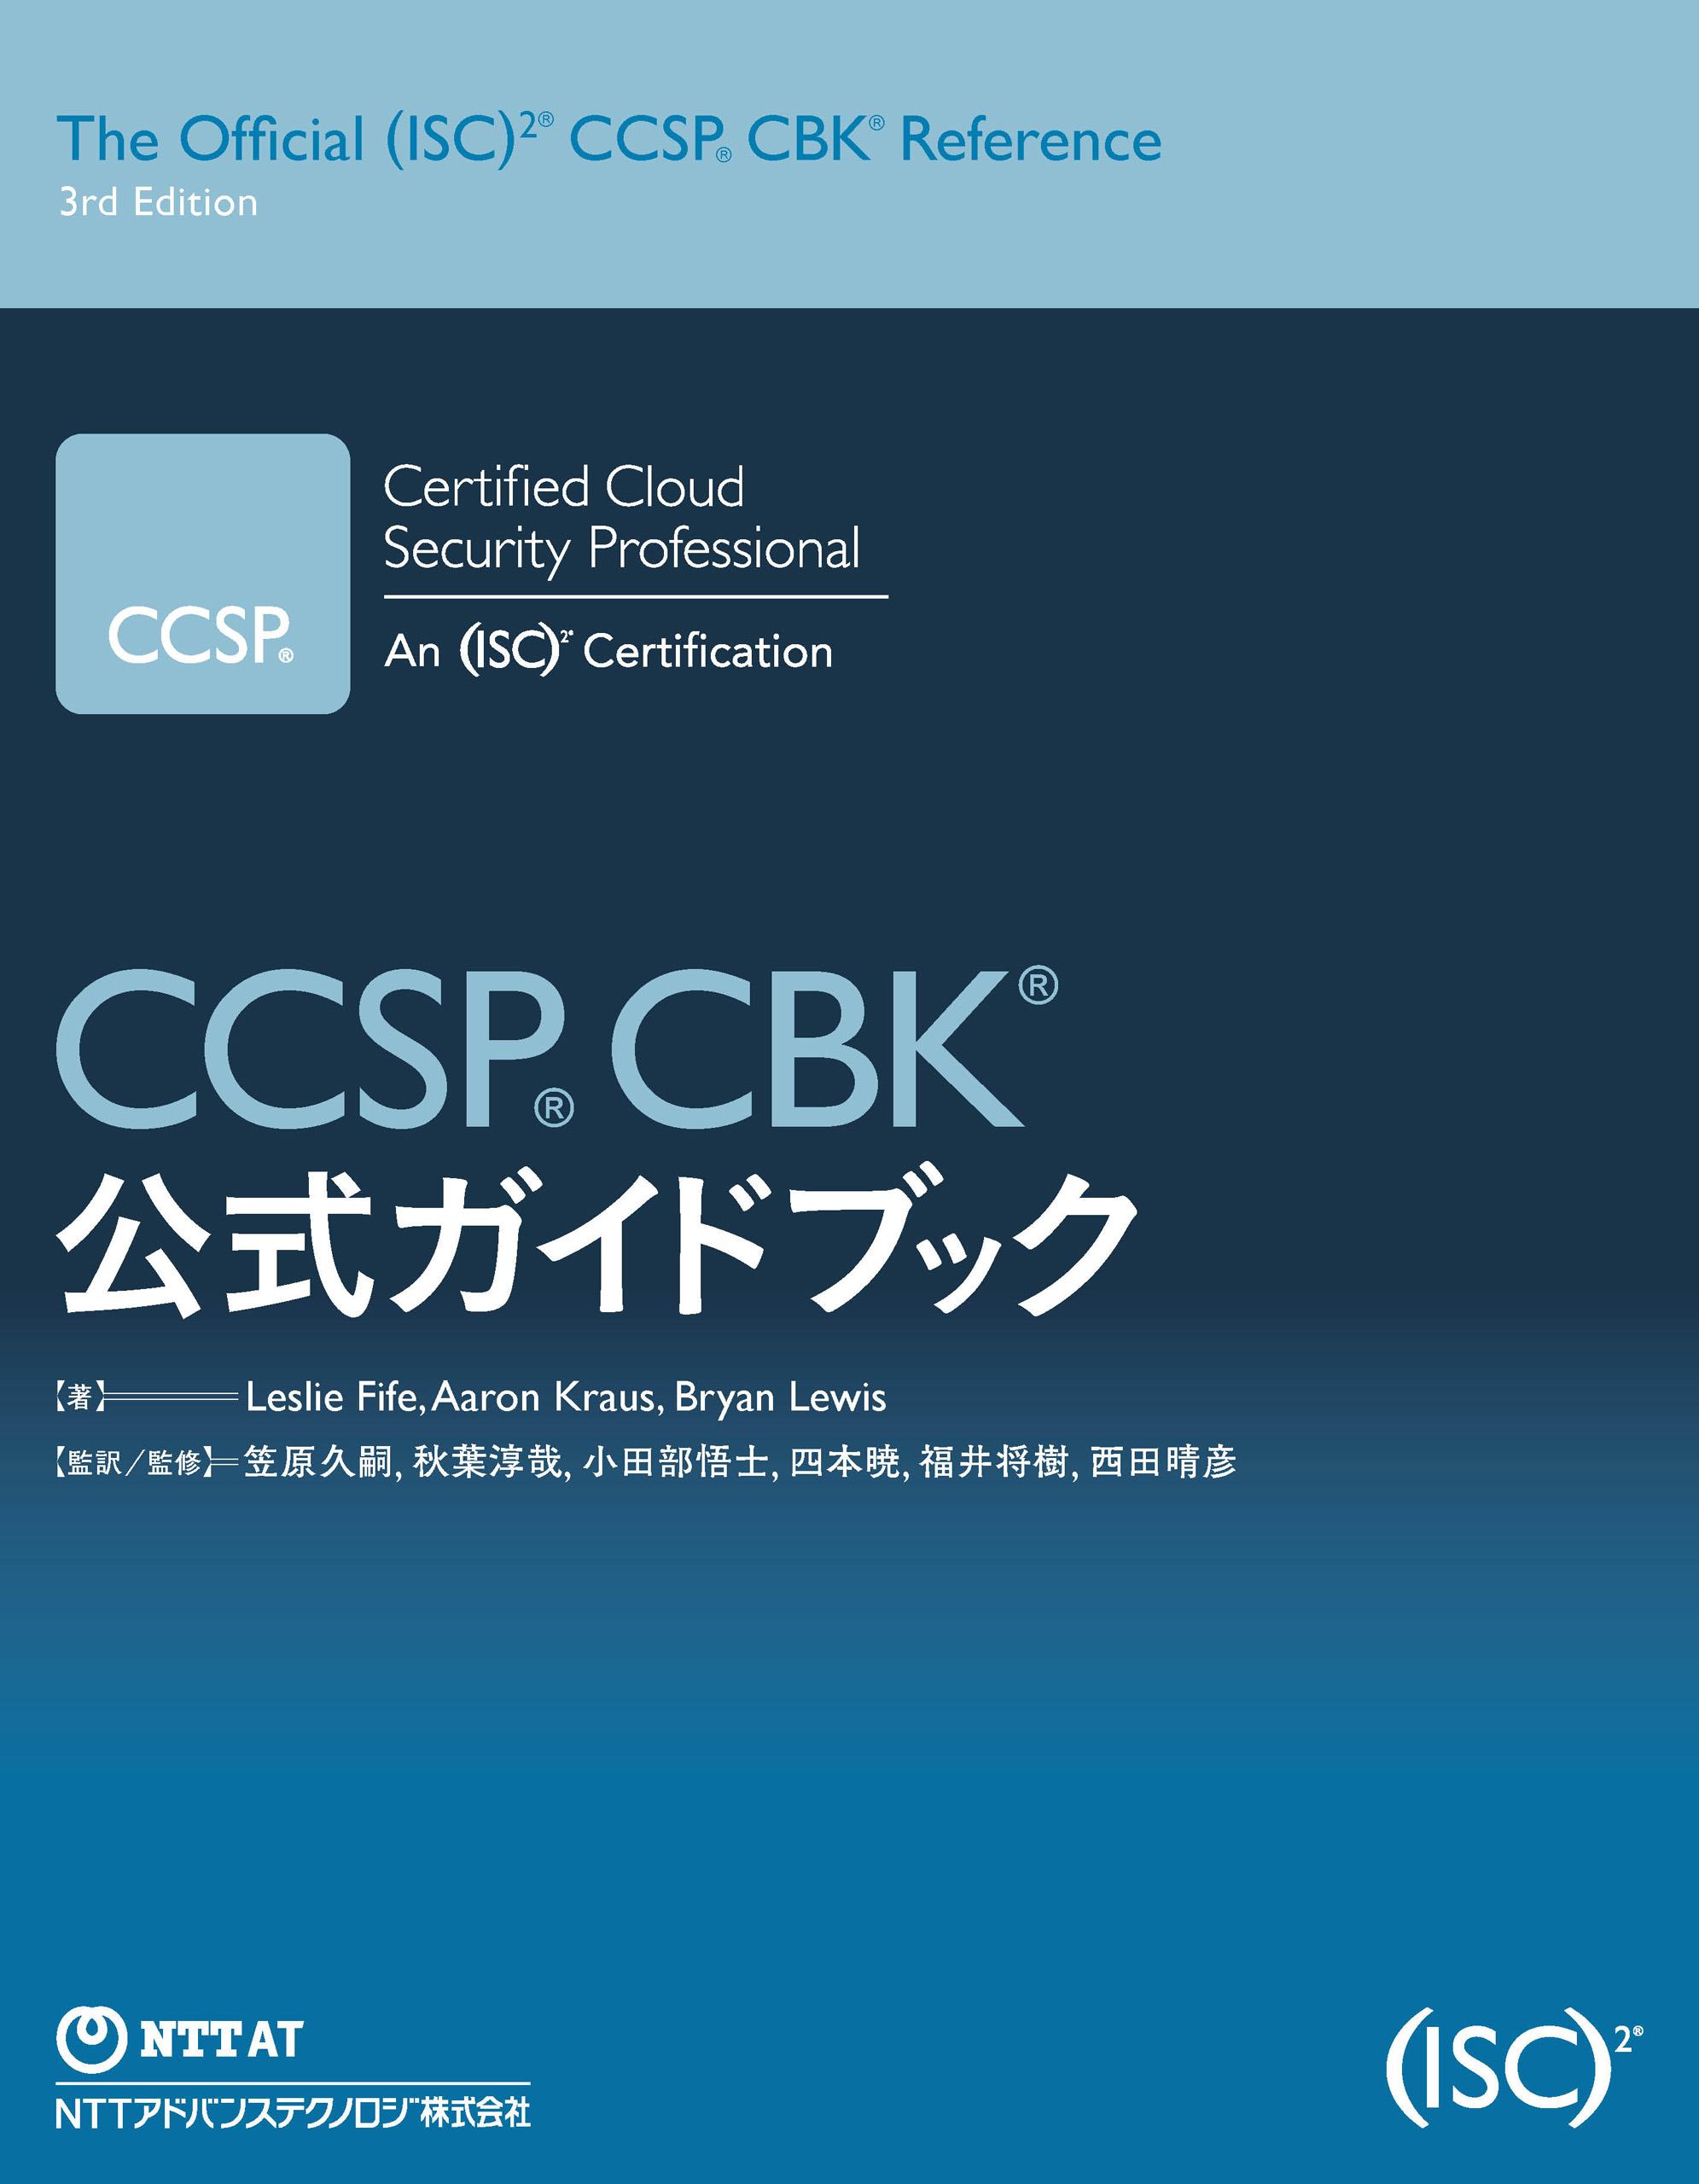 CCSP CBK 公式ガイドブックの表紙